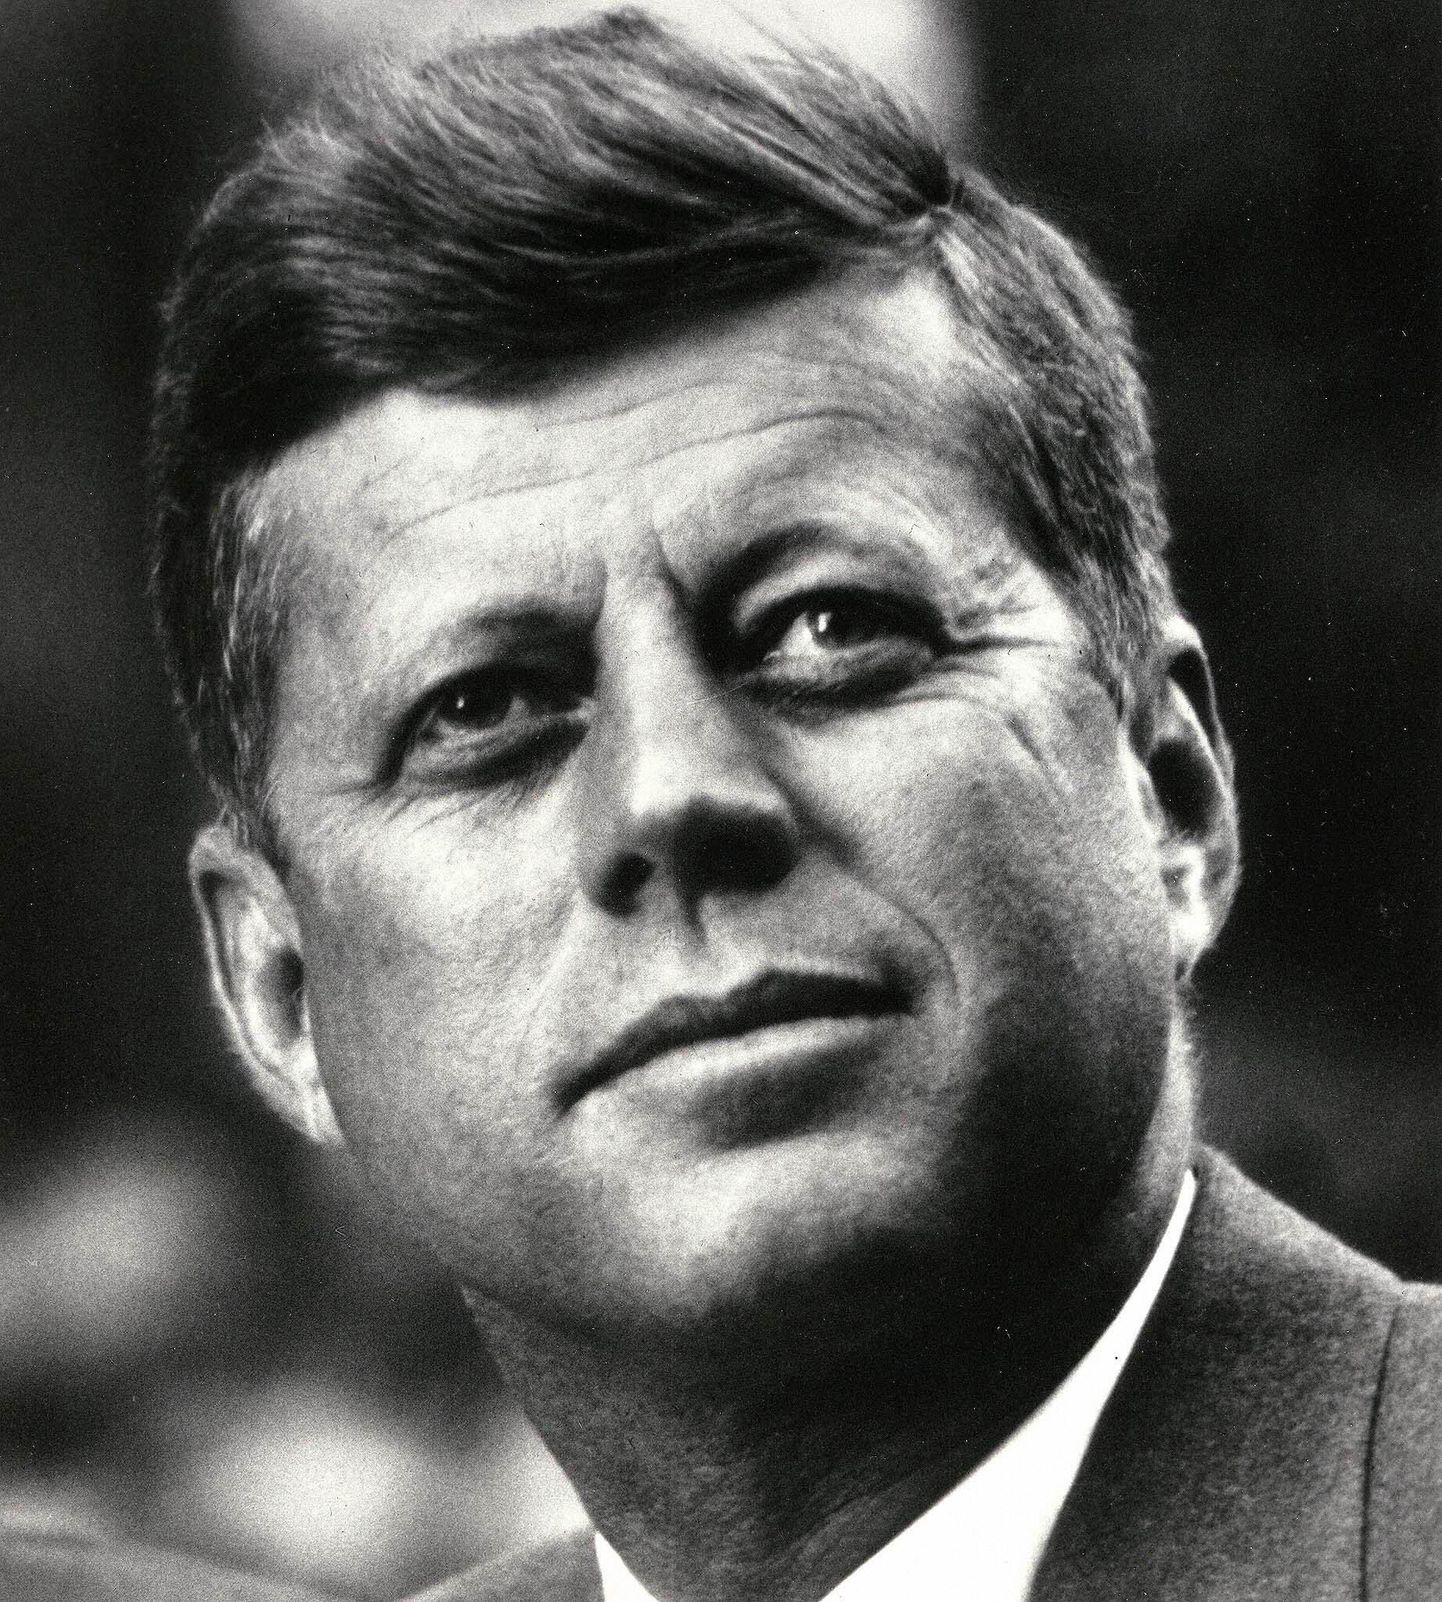 USA president John F. Kennedy